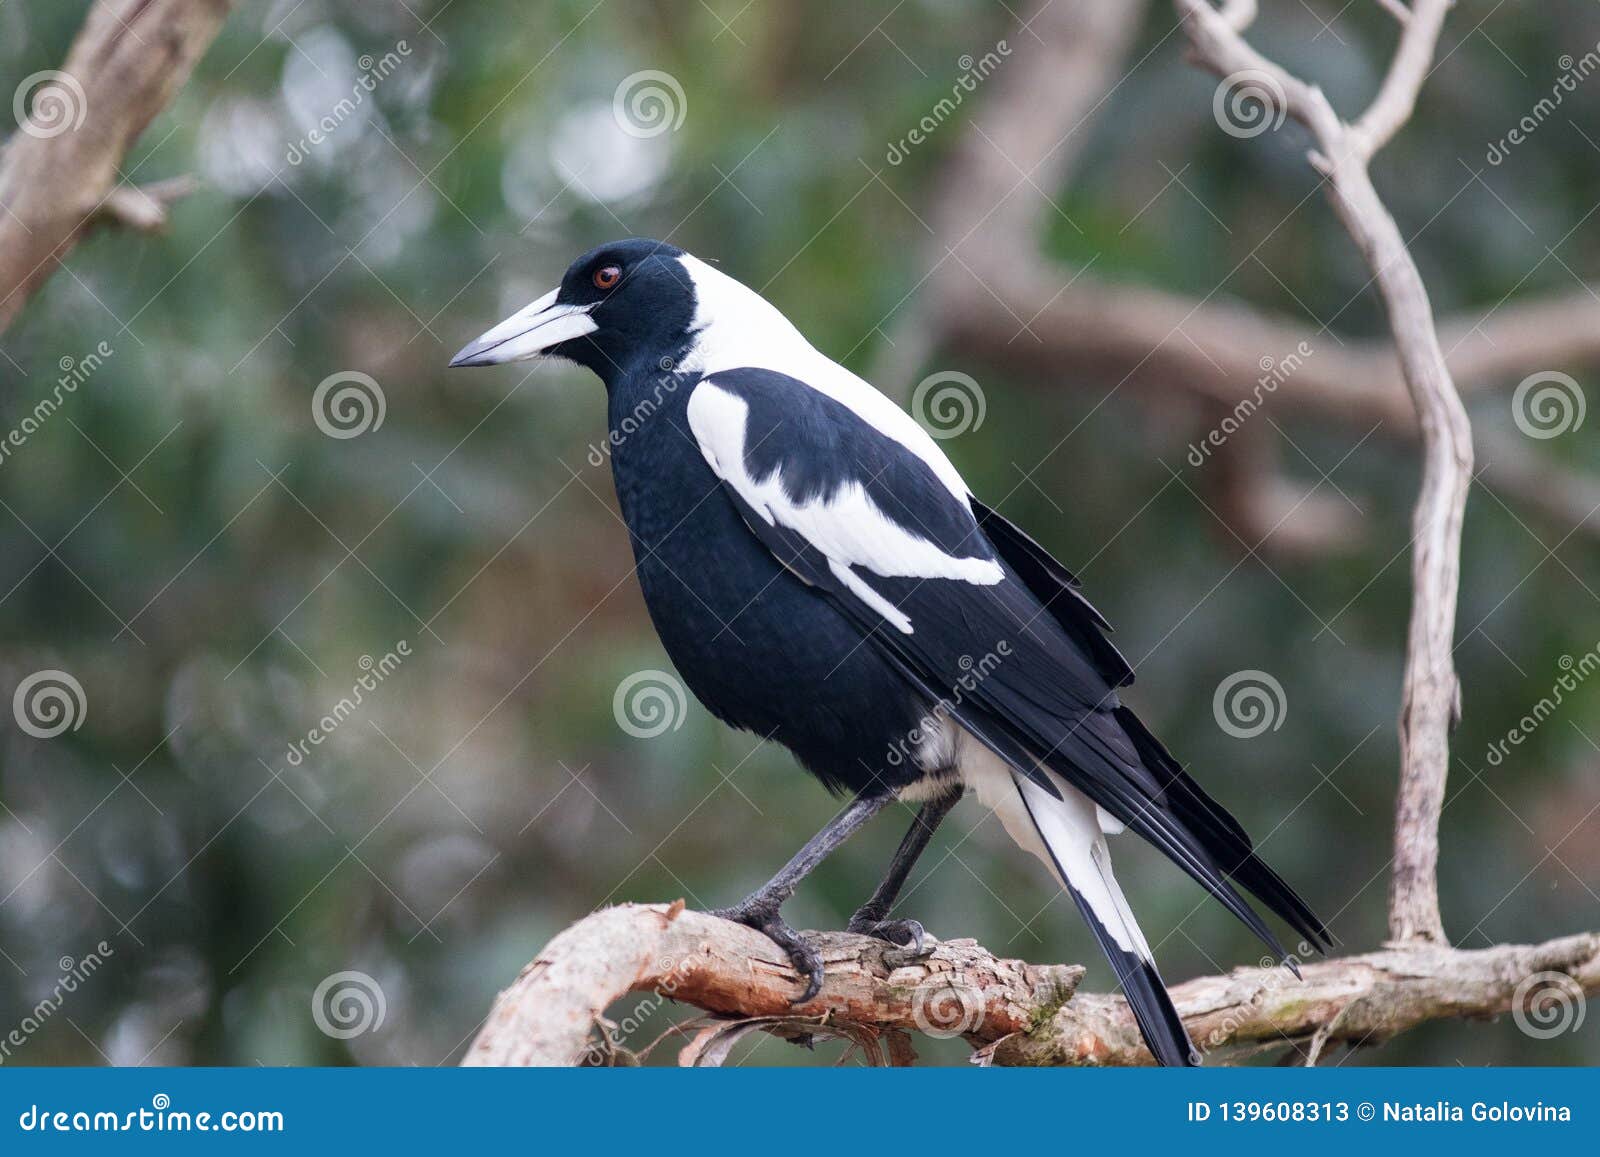 an australian magpie, gymnorhina tibicen, sitting on the branches of tree. australia